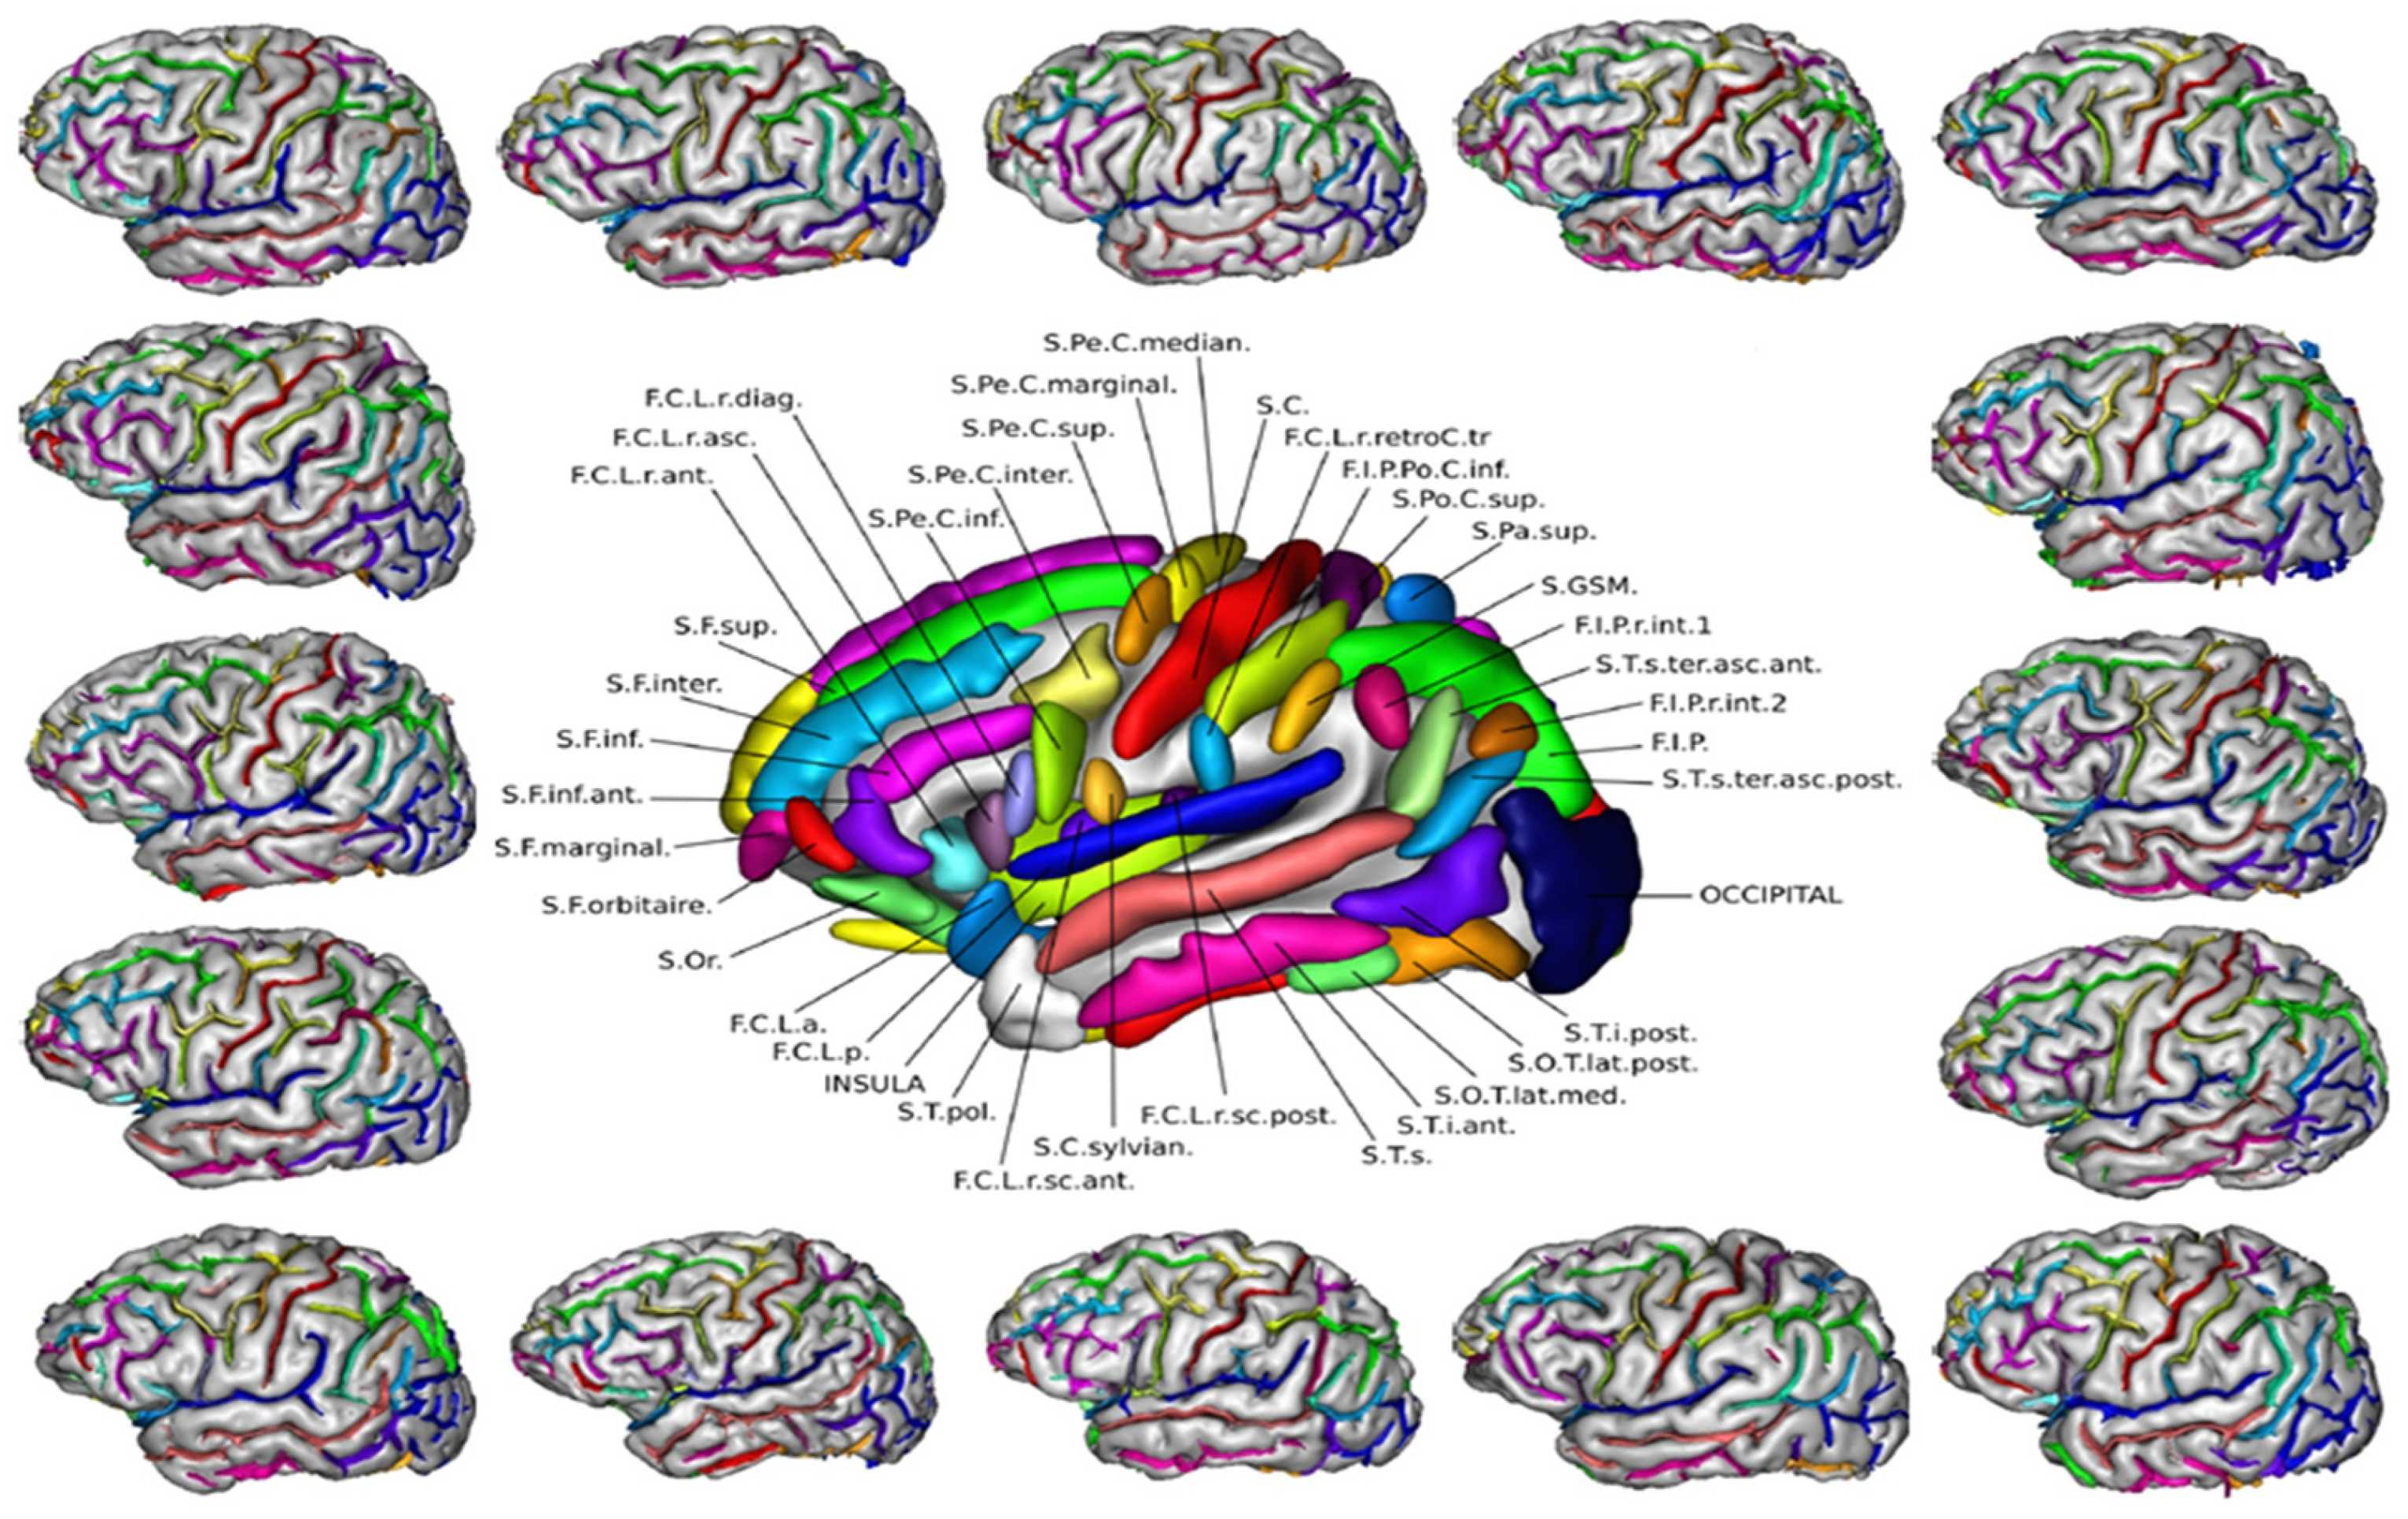 The genetic architecture of the human cerebral cortex